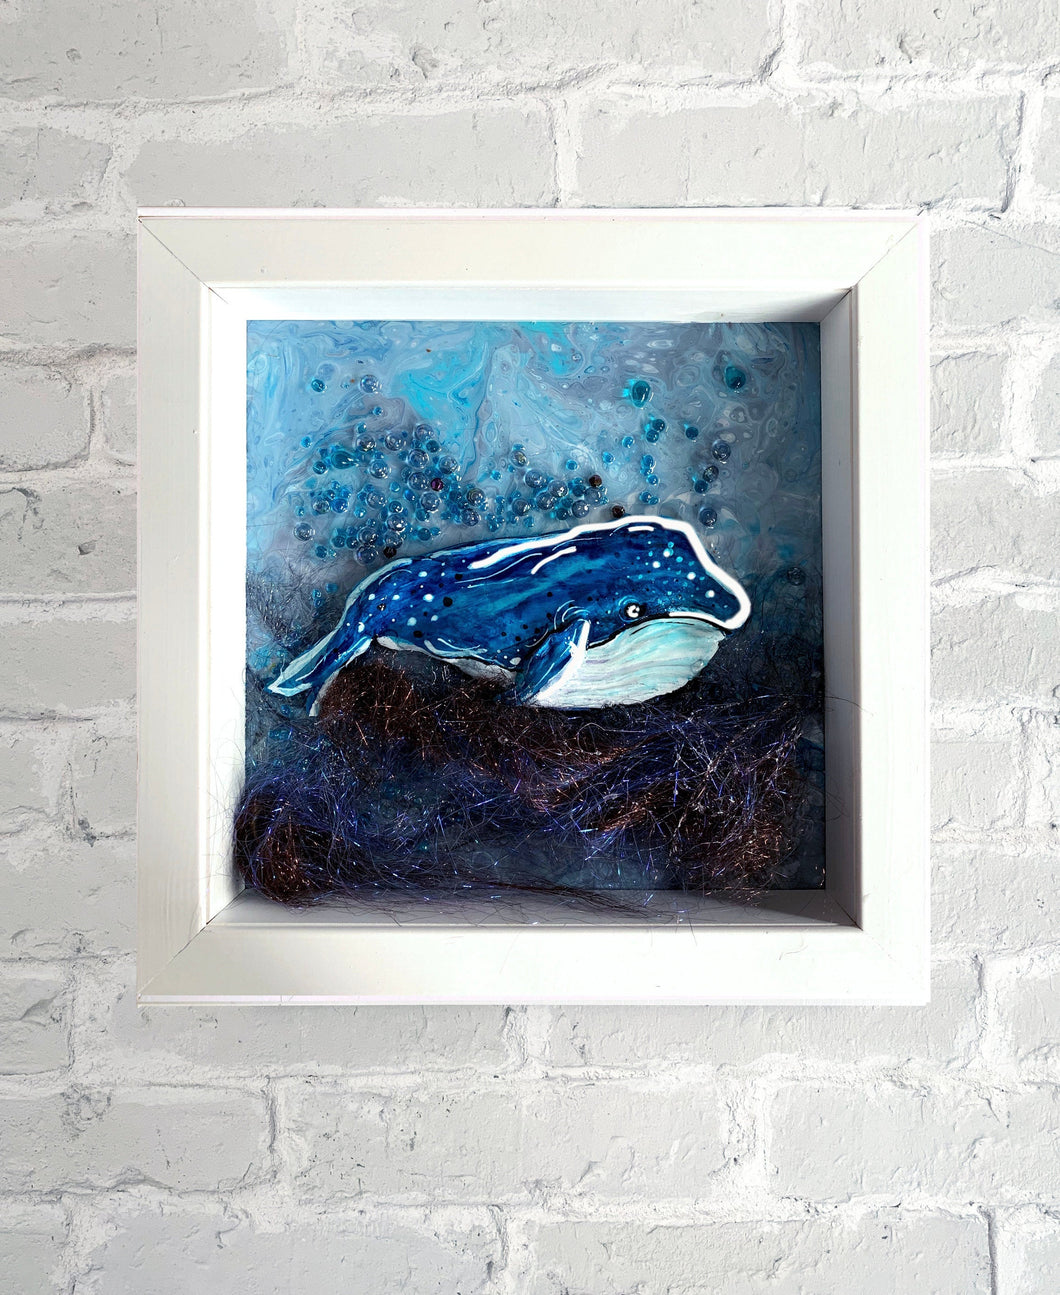 Free Whale - Wonderful piece of art